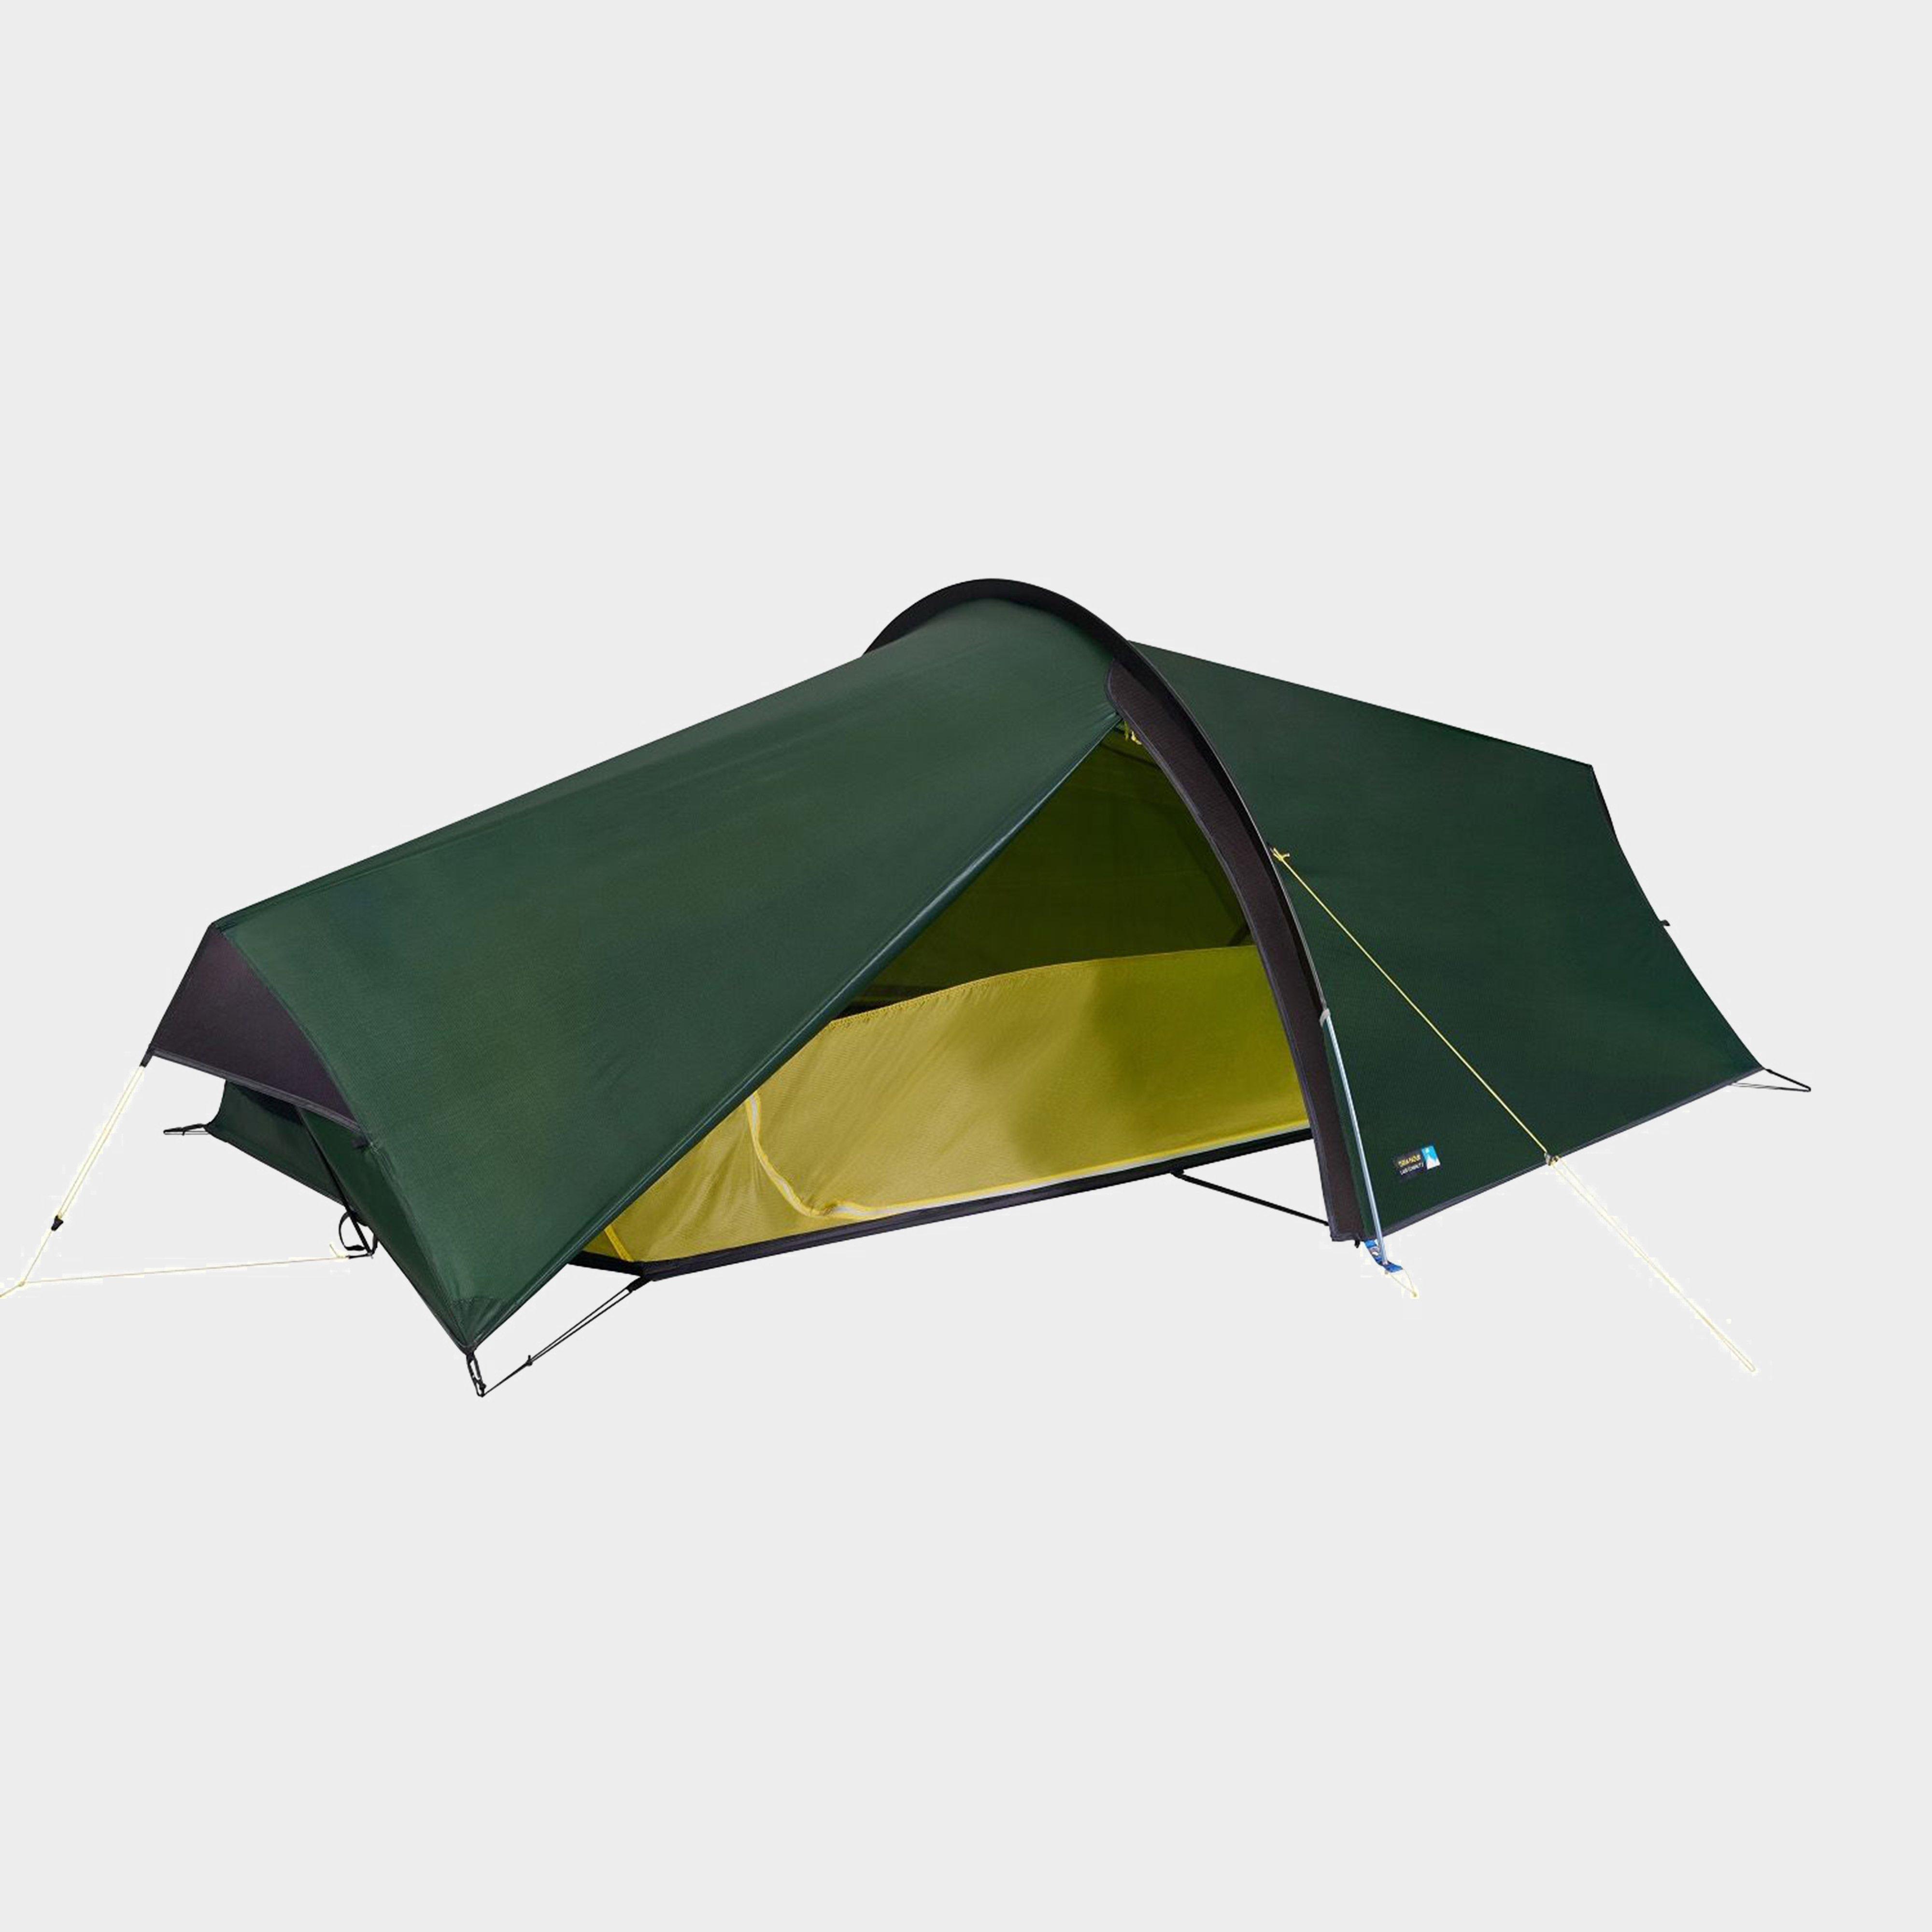 Terra Nova Laser Compact 2 Tent - Tent Buyer - Compare tent prices